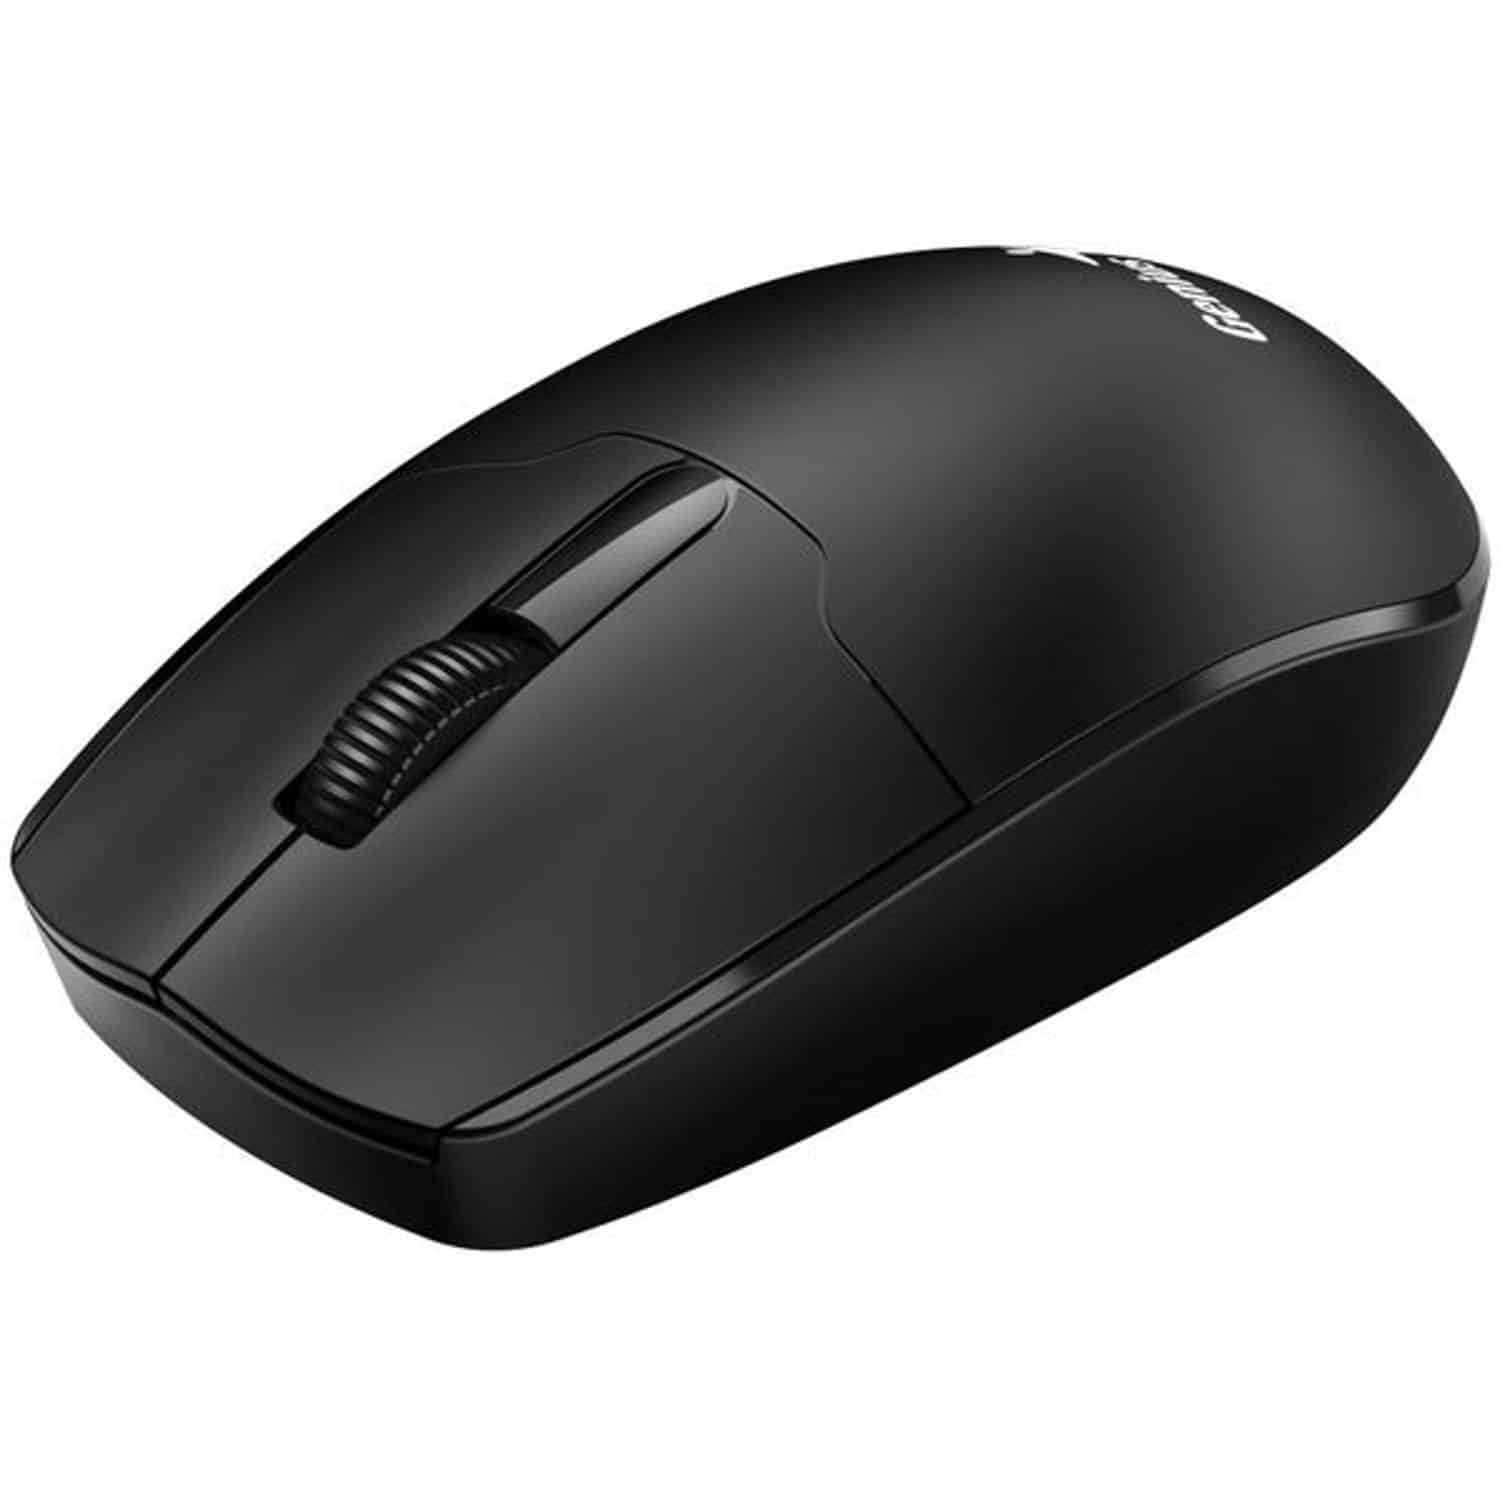 עכבר גניוס Genius NX-7000SE BLACK